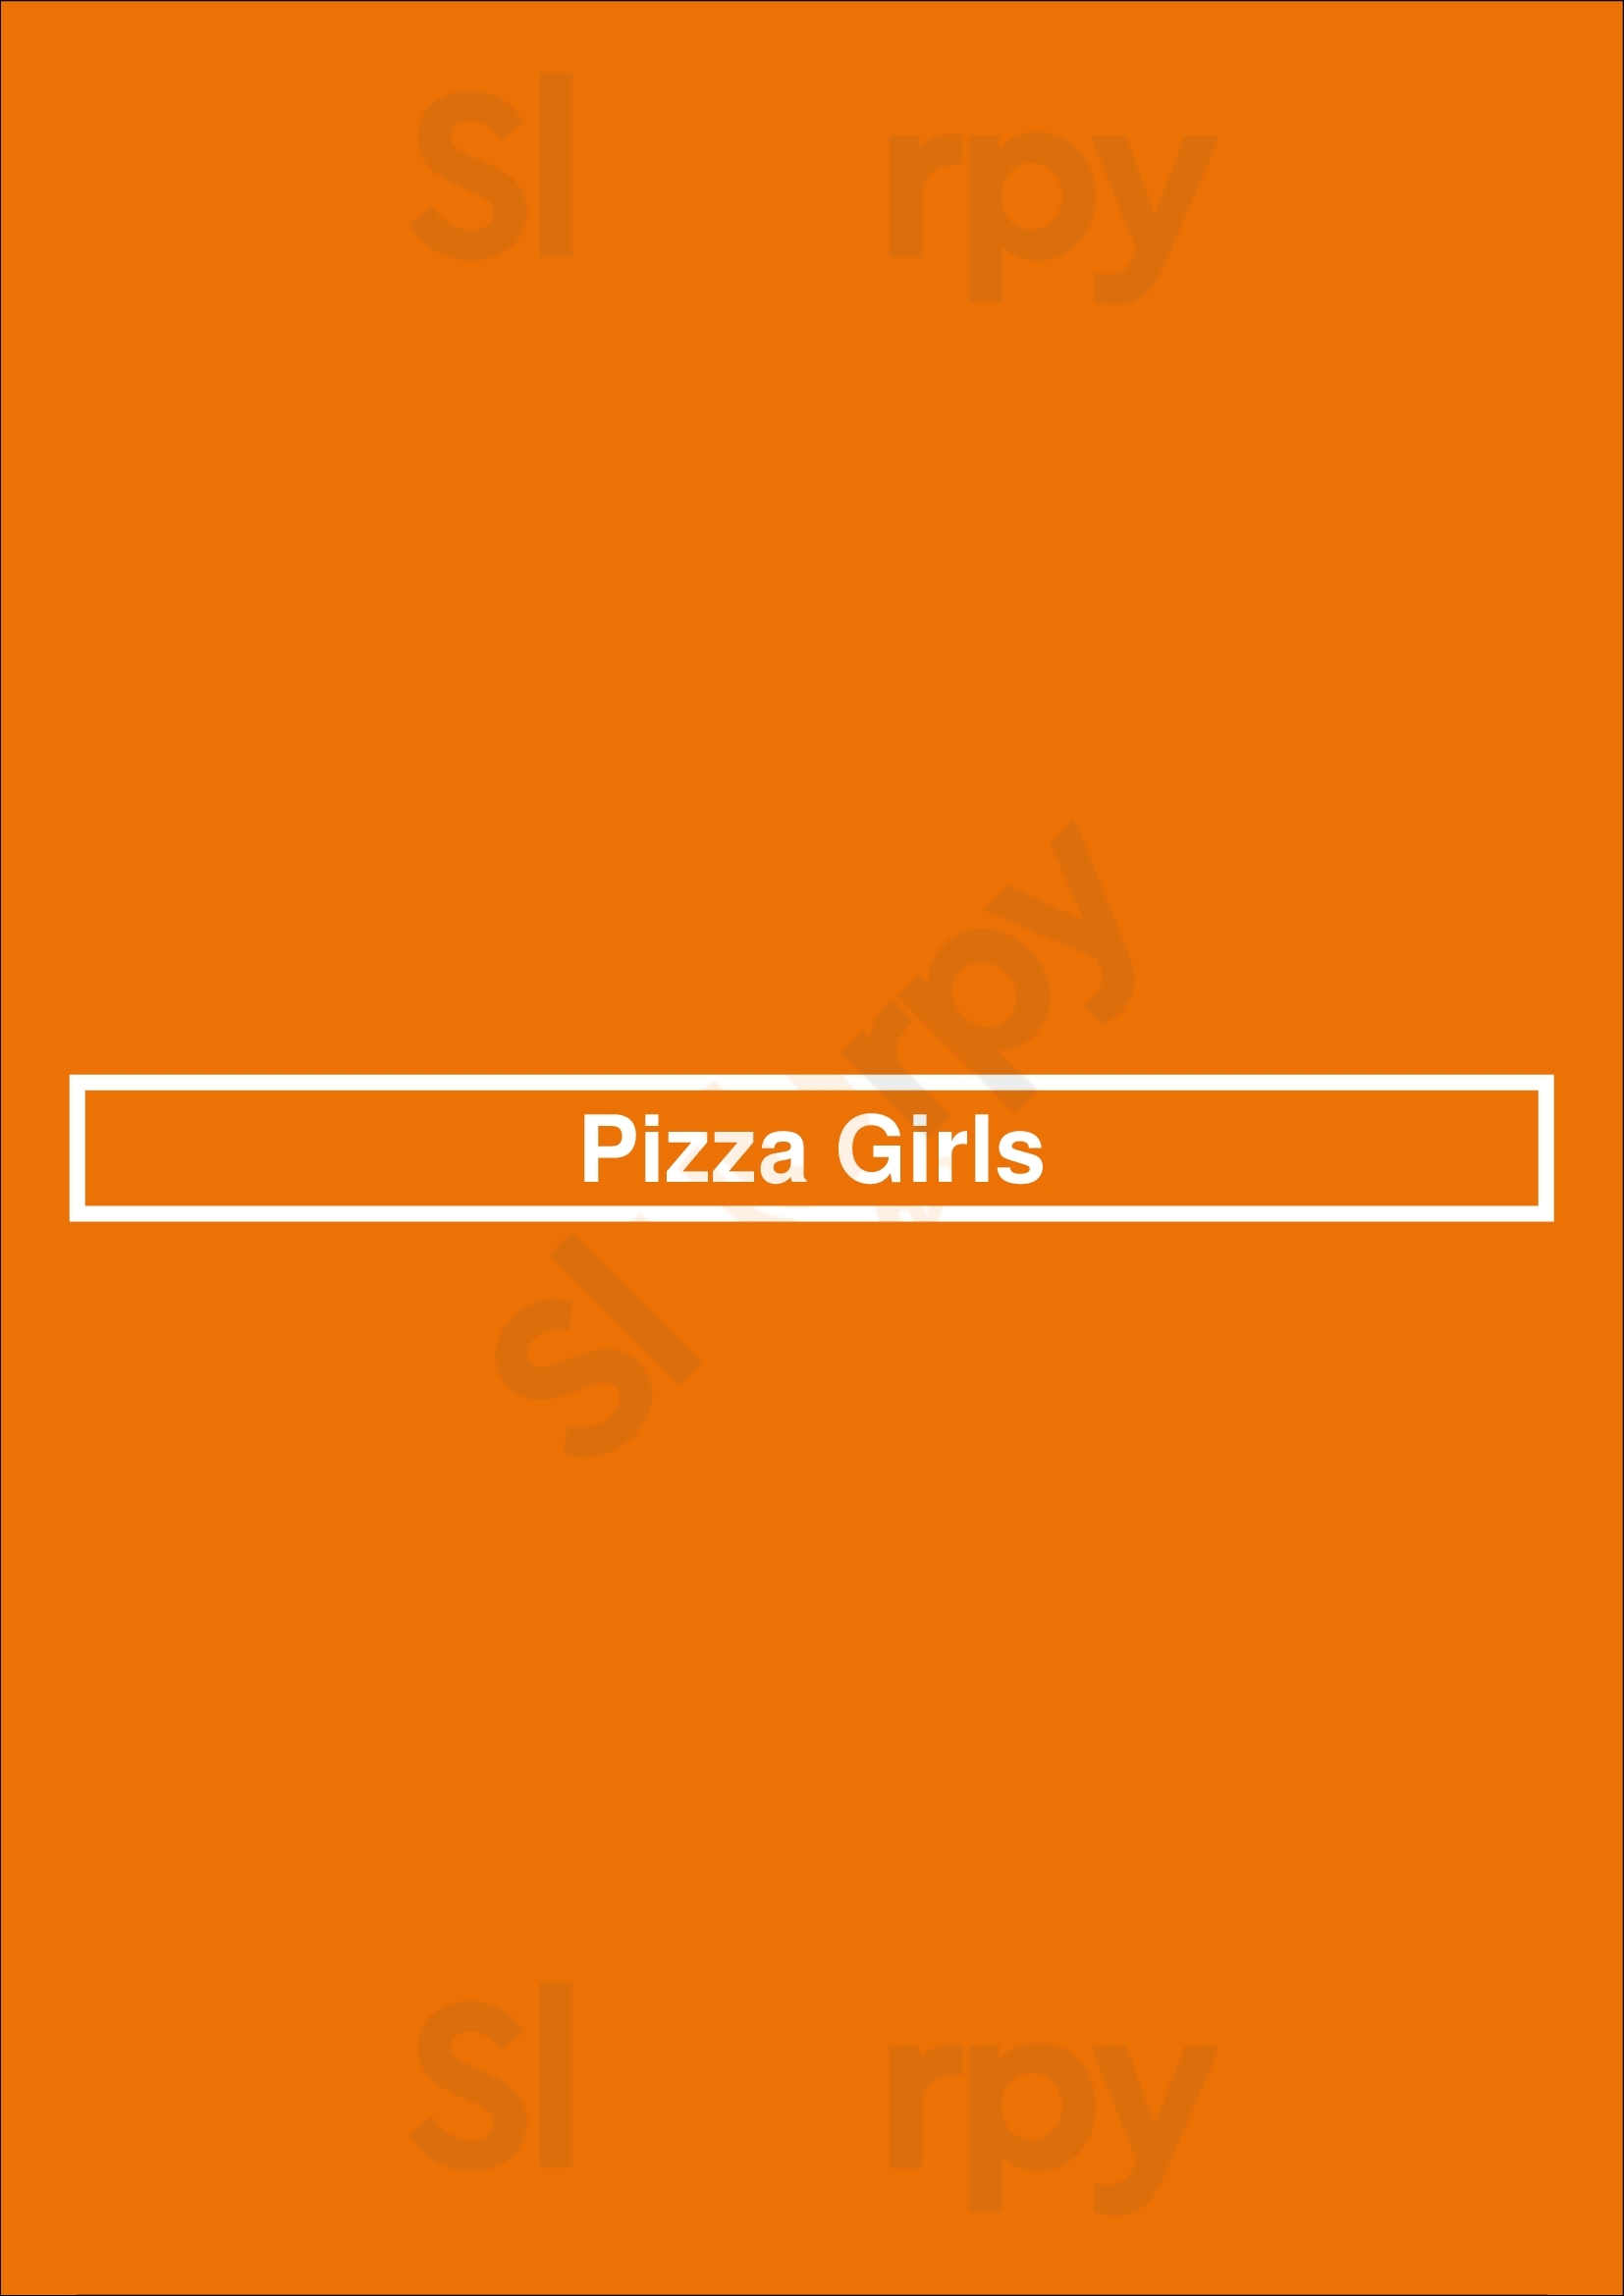 Pizza Girls Bedford Menu - 1